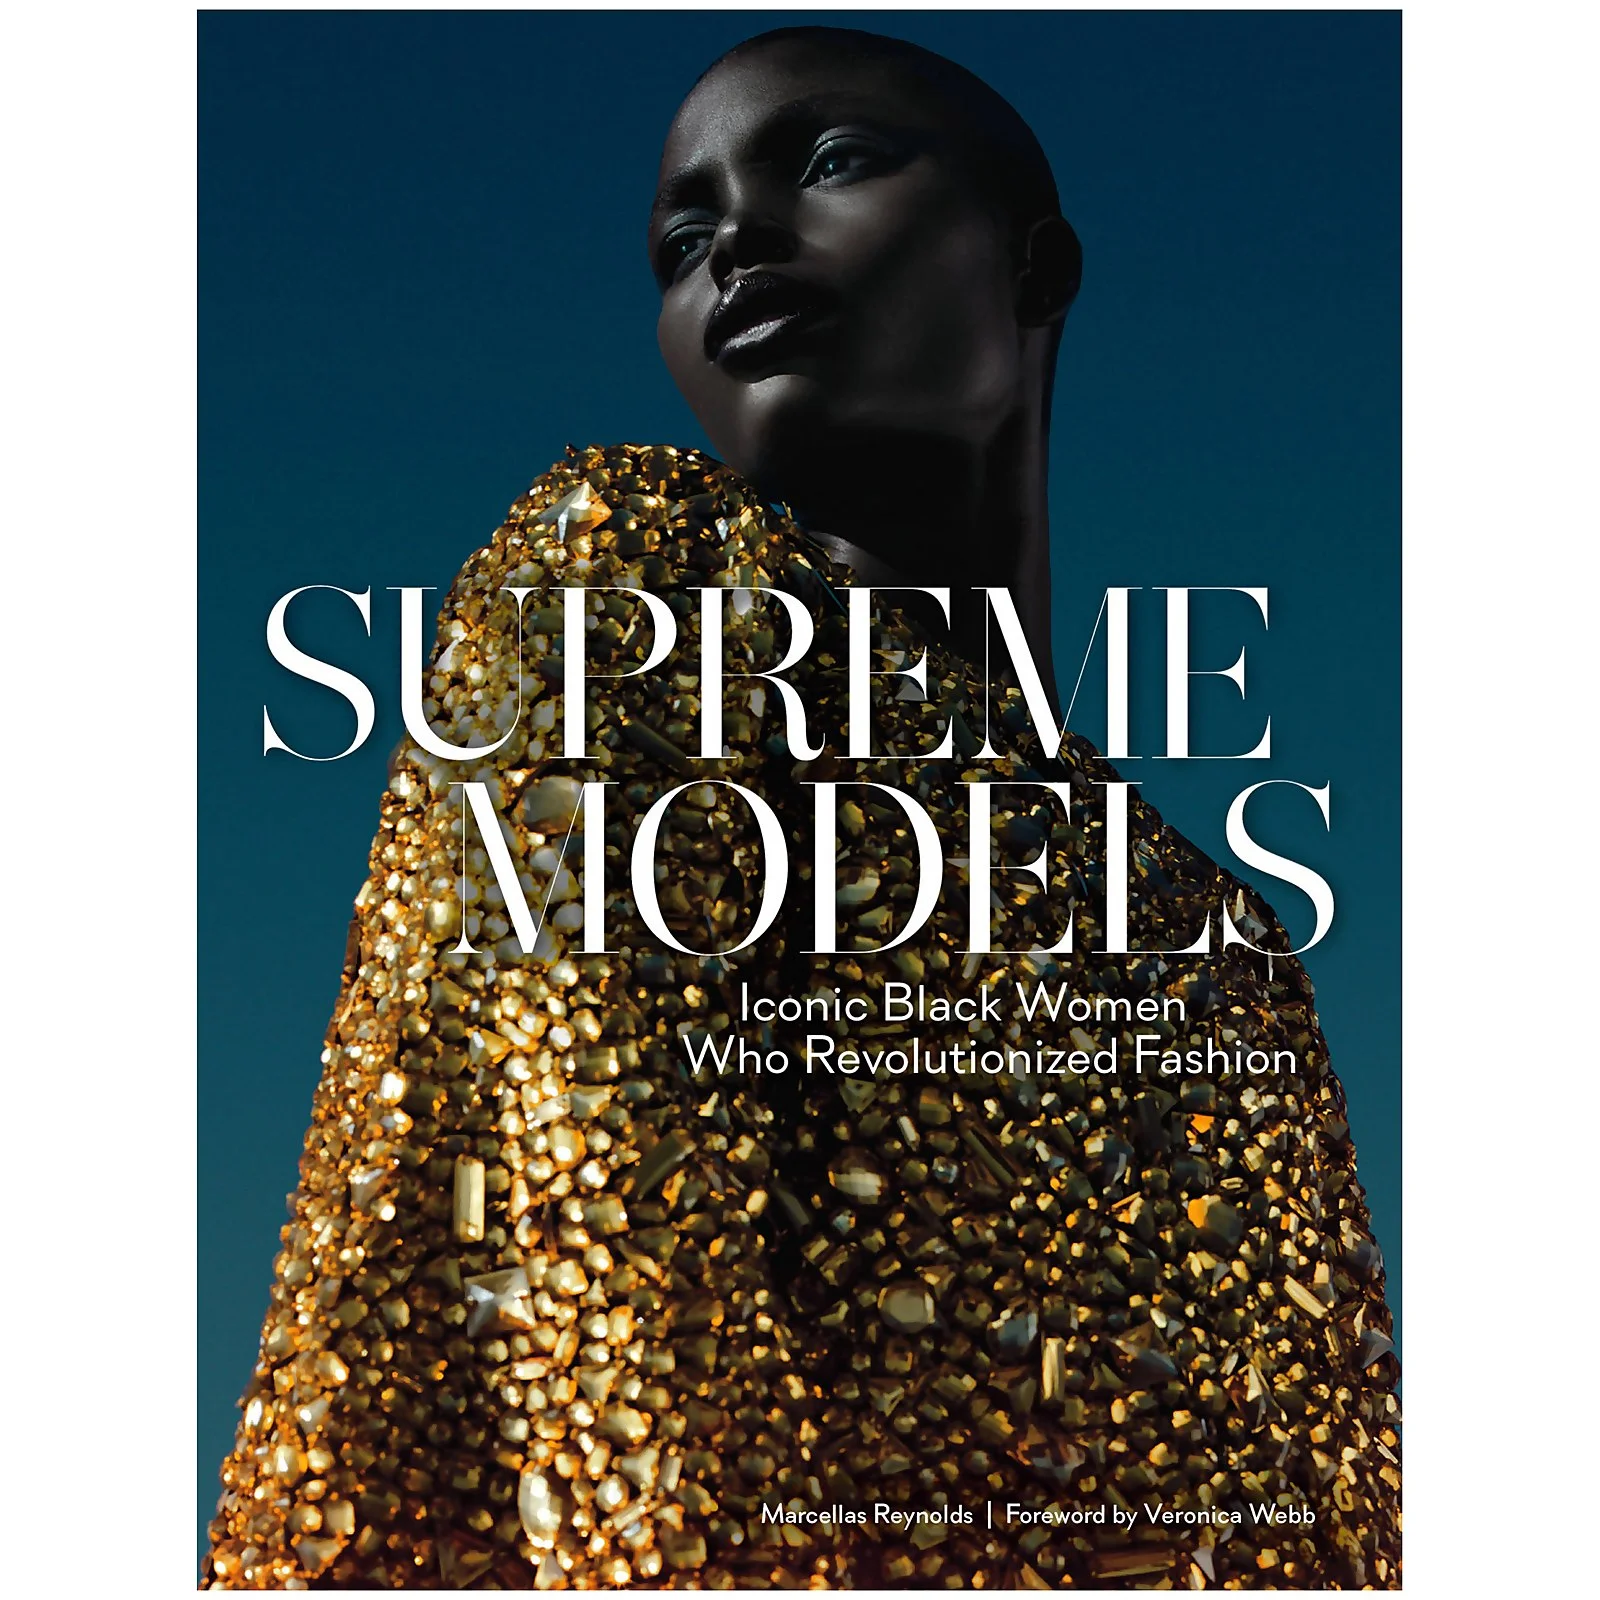 Abrams & Chronicle: Supreme Models Image 1